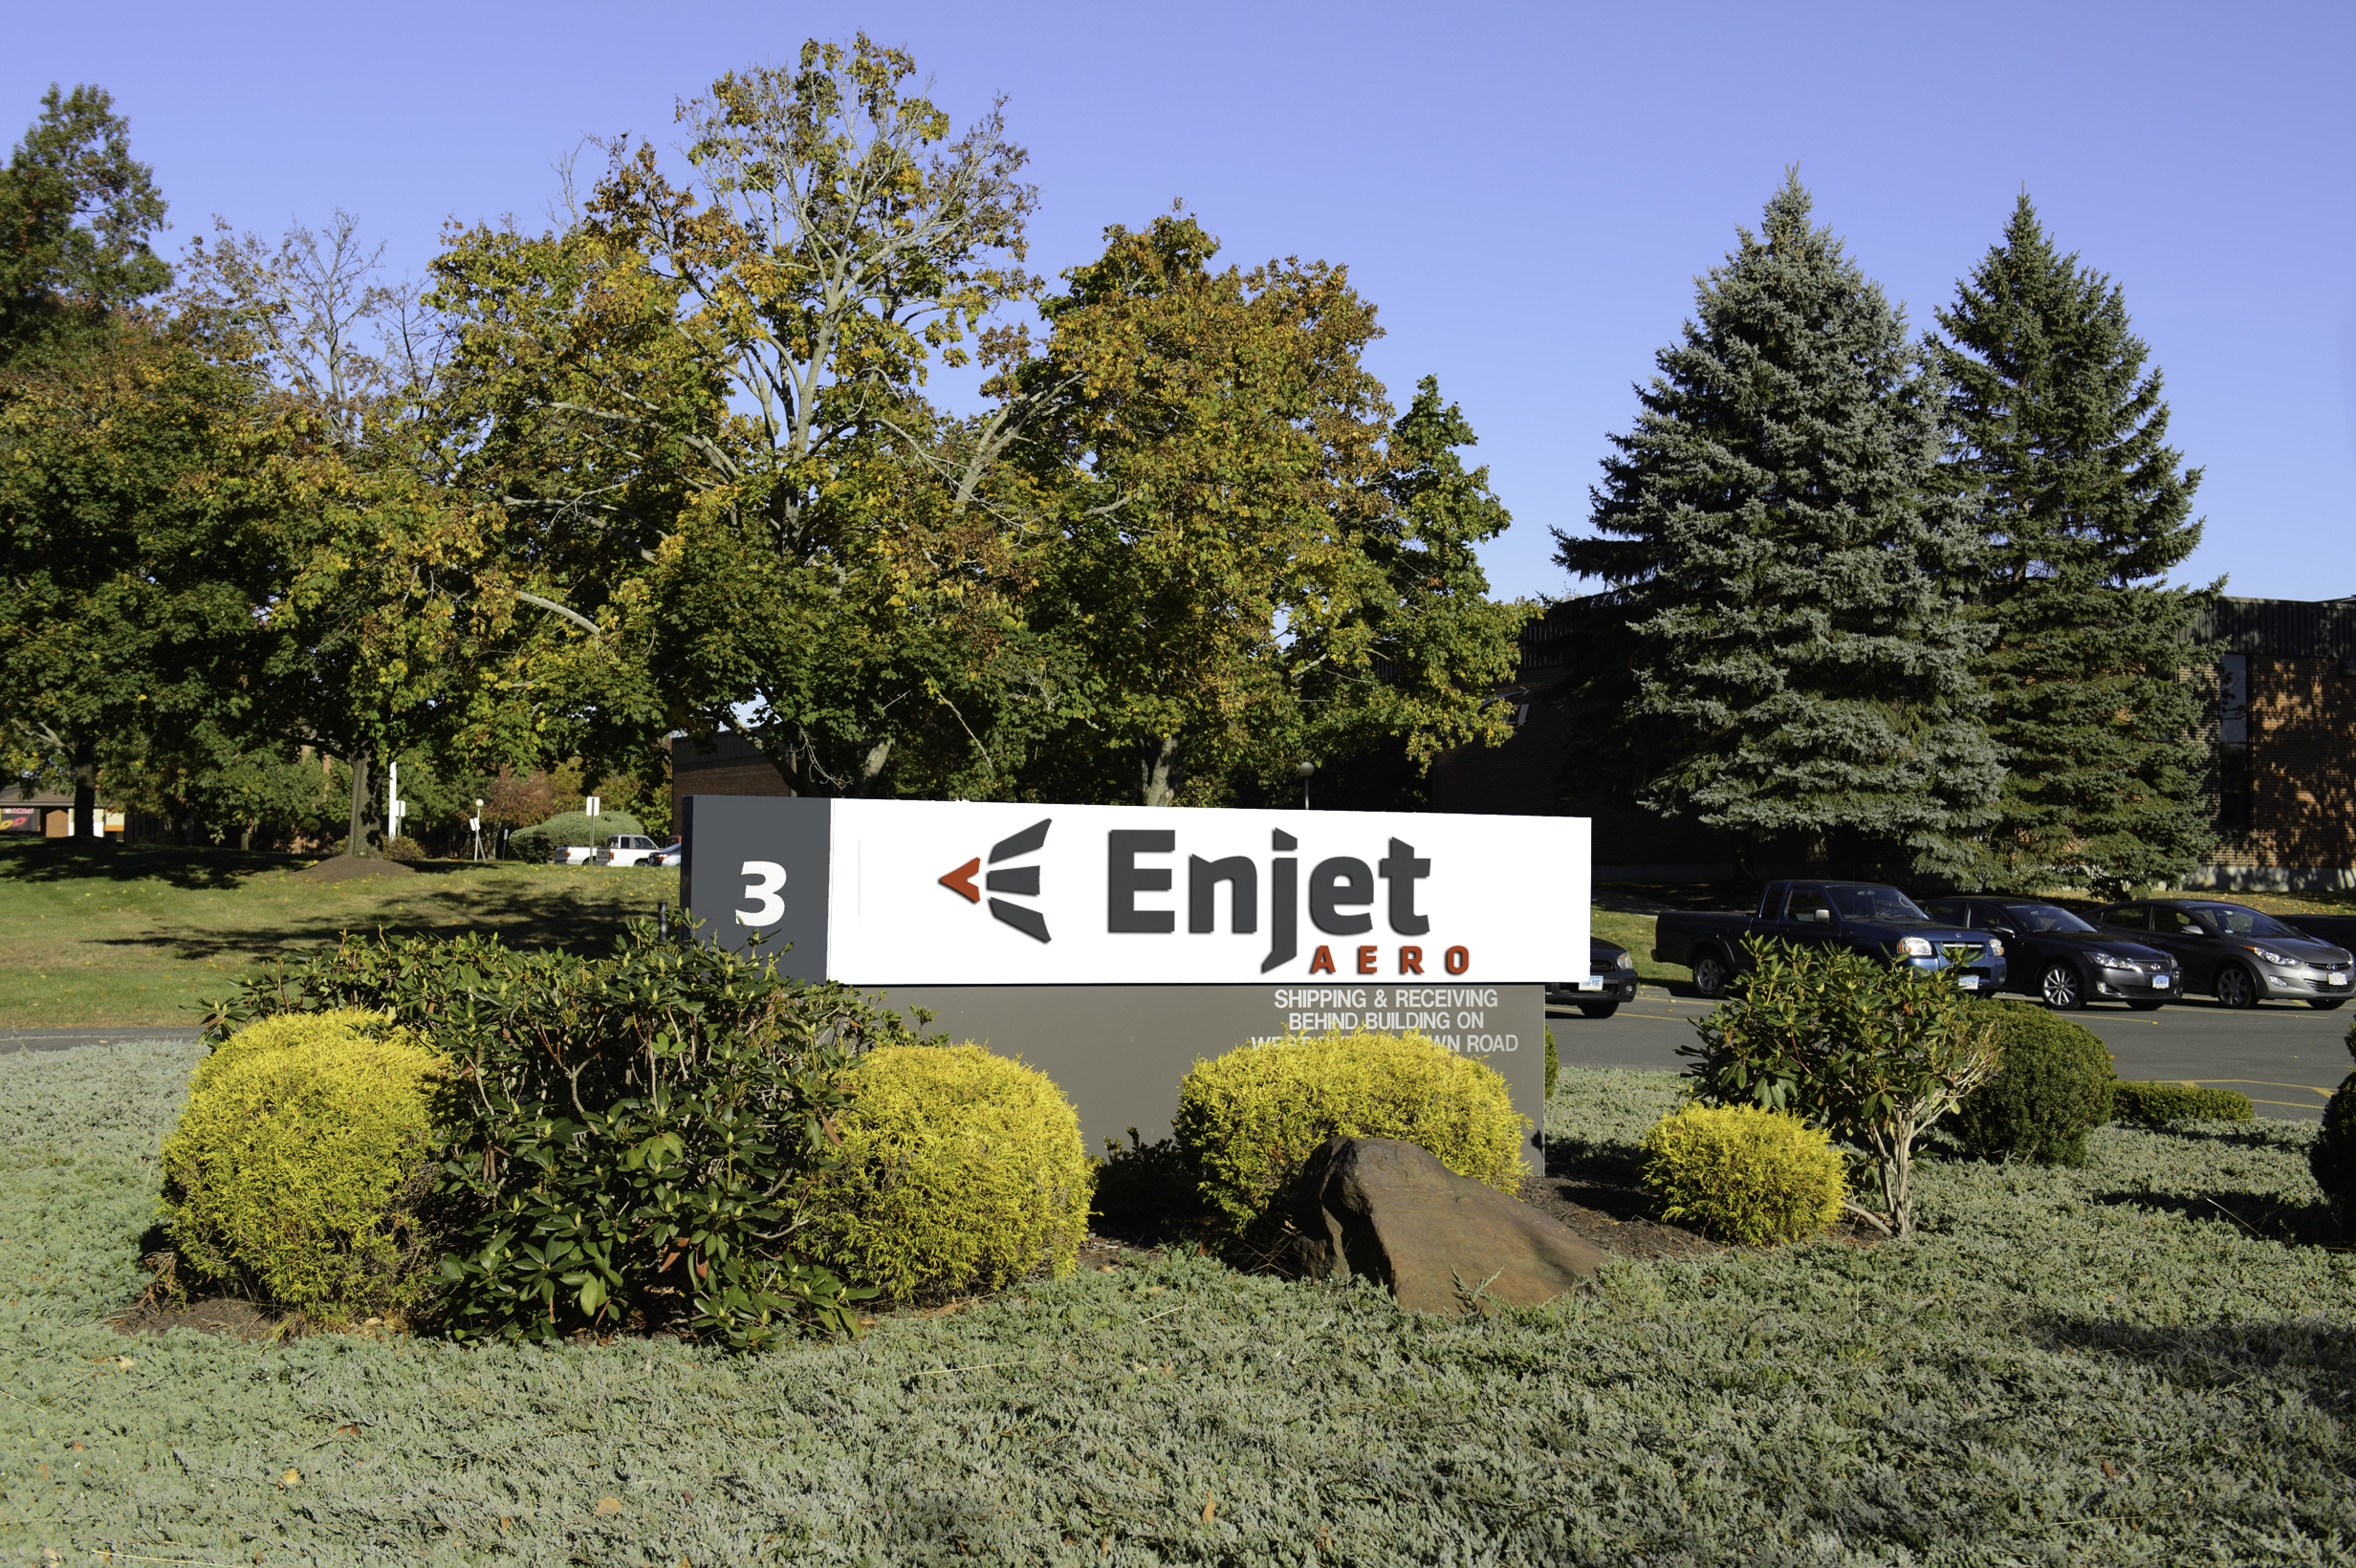 Enjet Aero Completes Acquisition of Birken Manufacturing